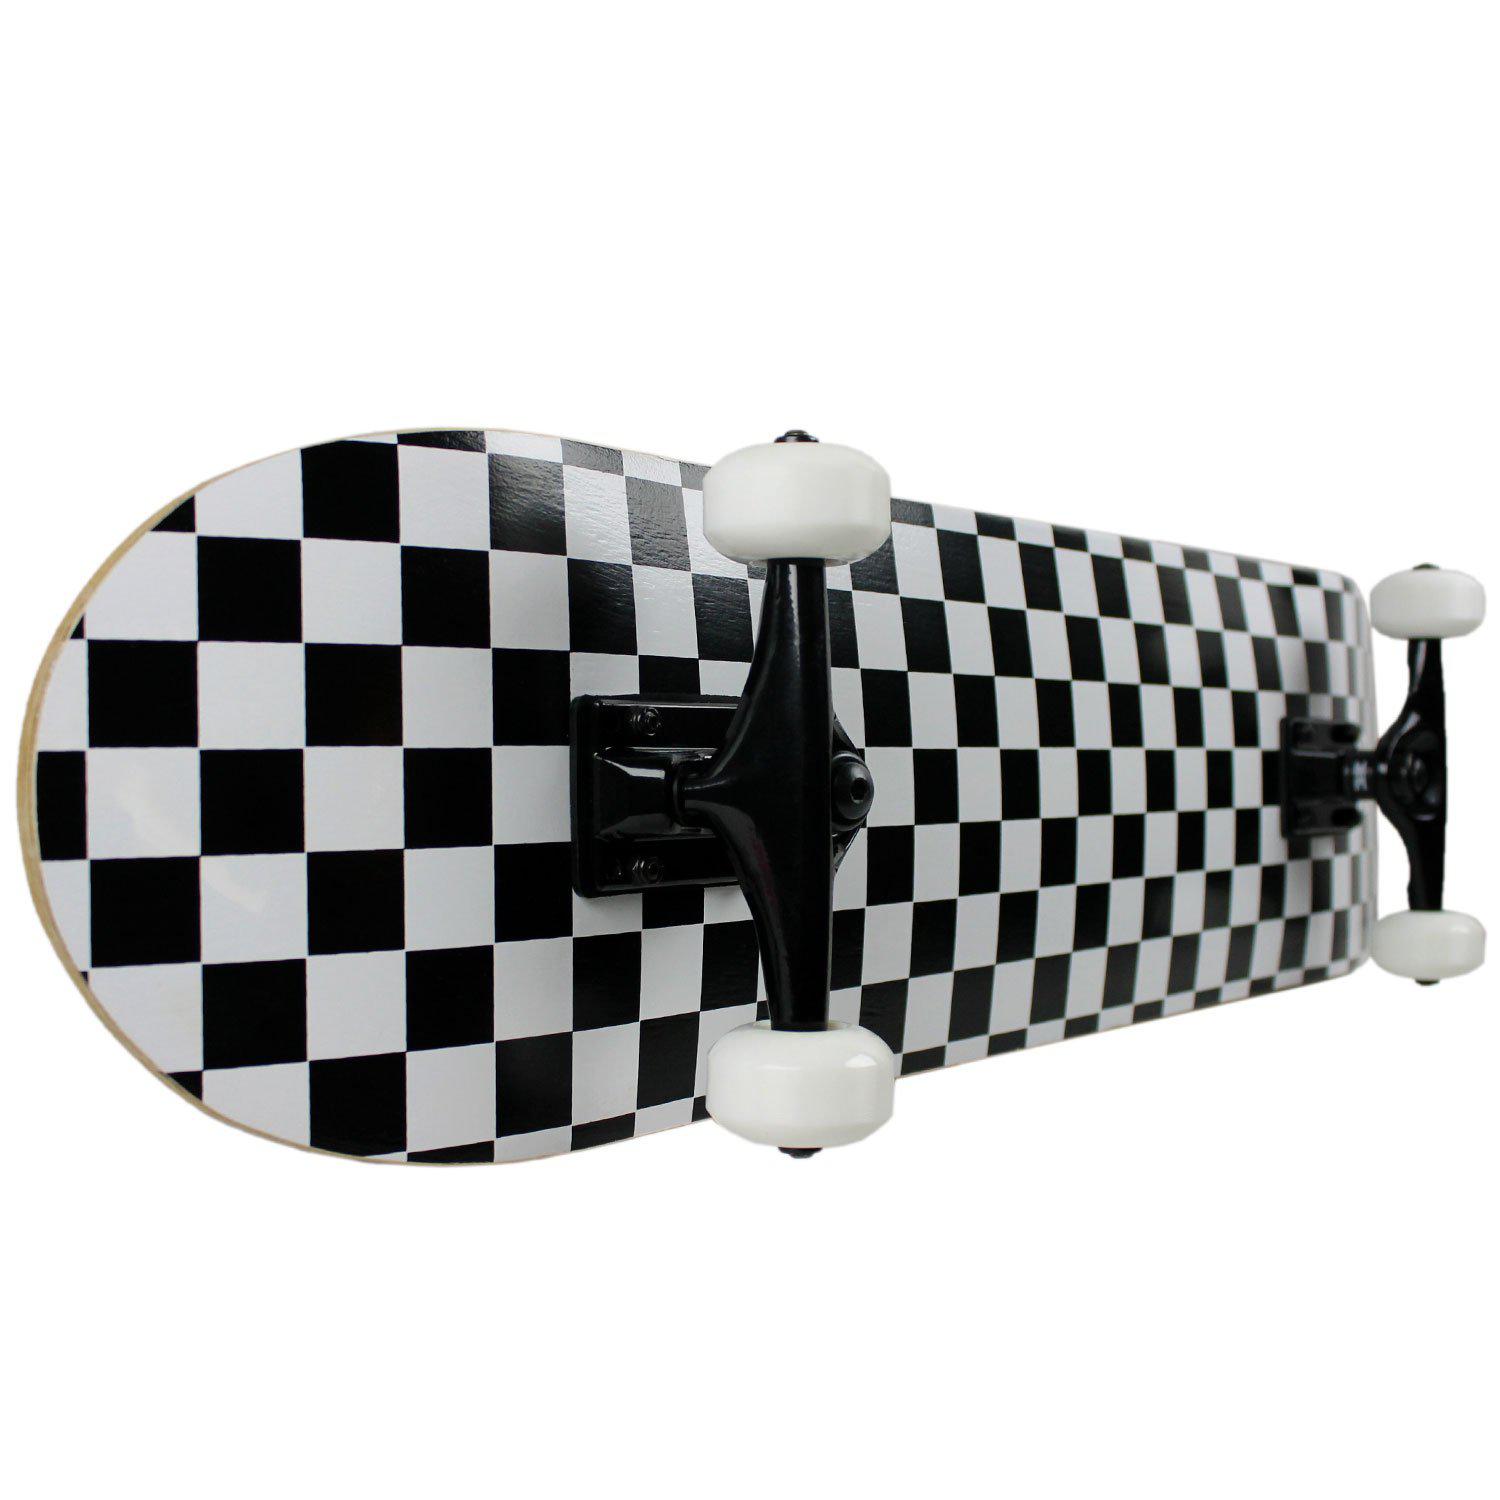 krown rookie checker skateboard, black/white, 7.75"